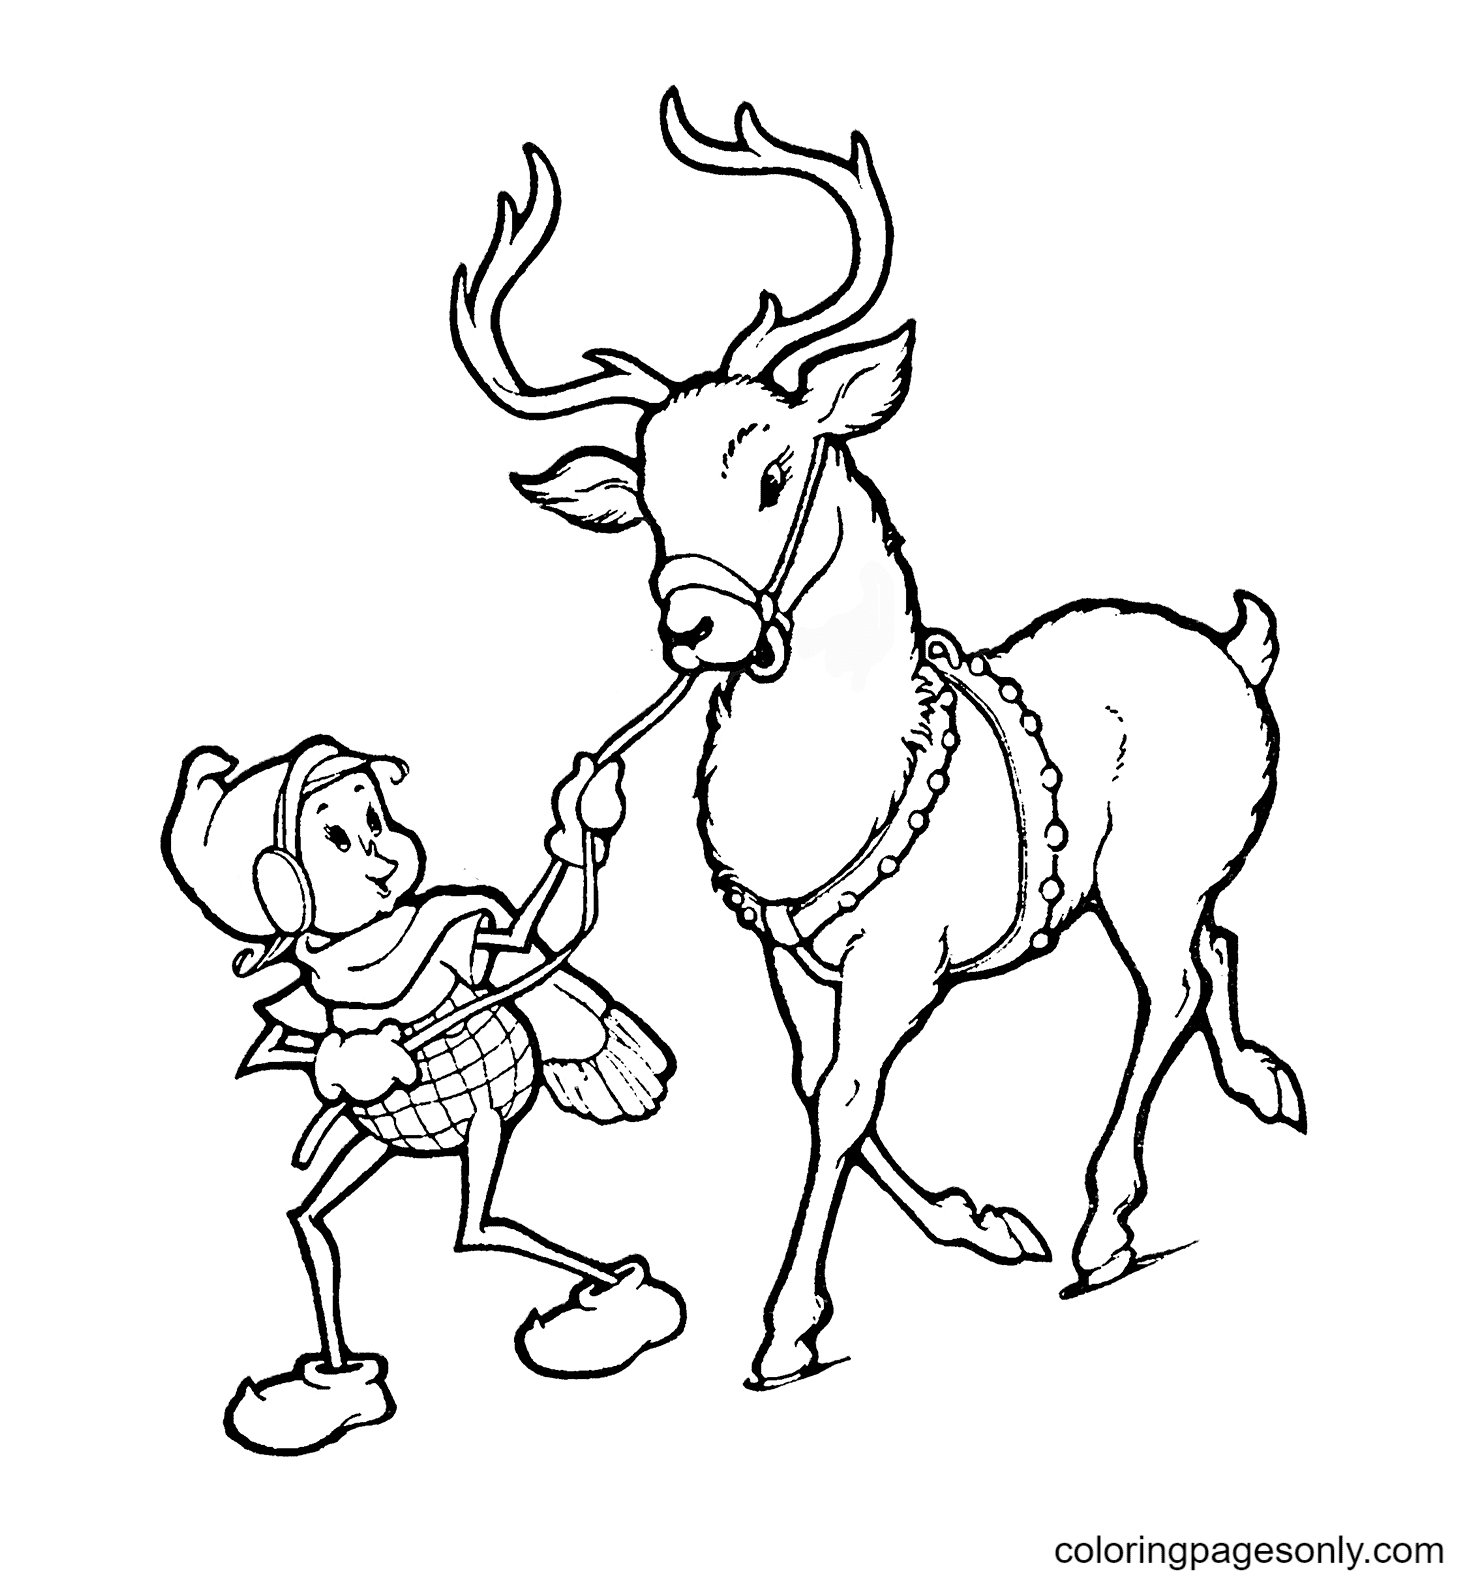 Elf and Reindeer Coloring Page